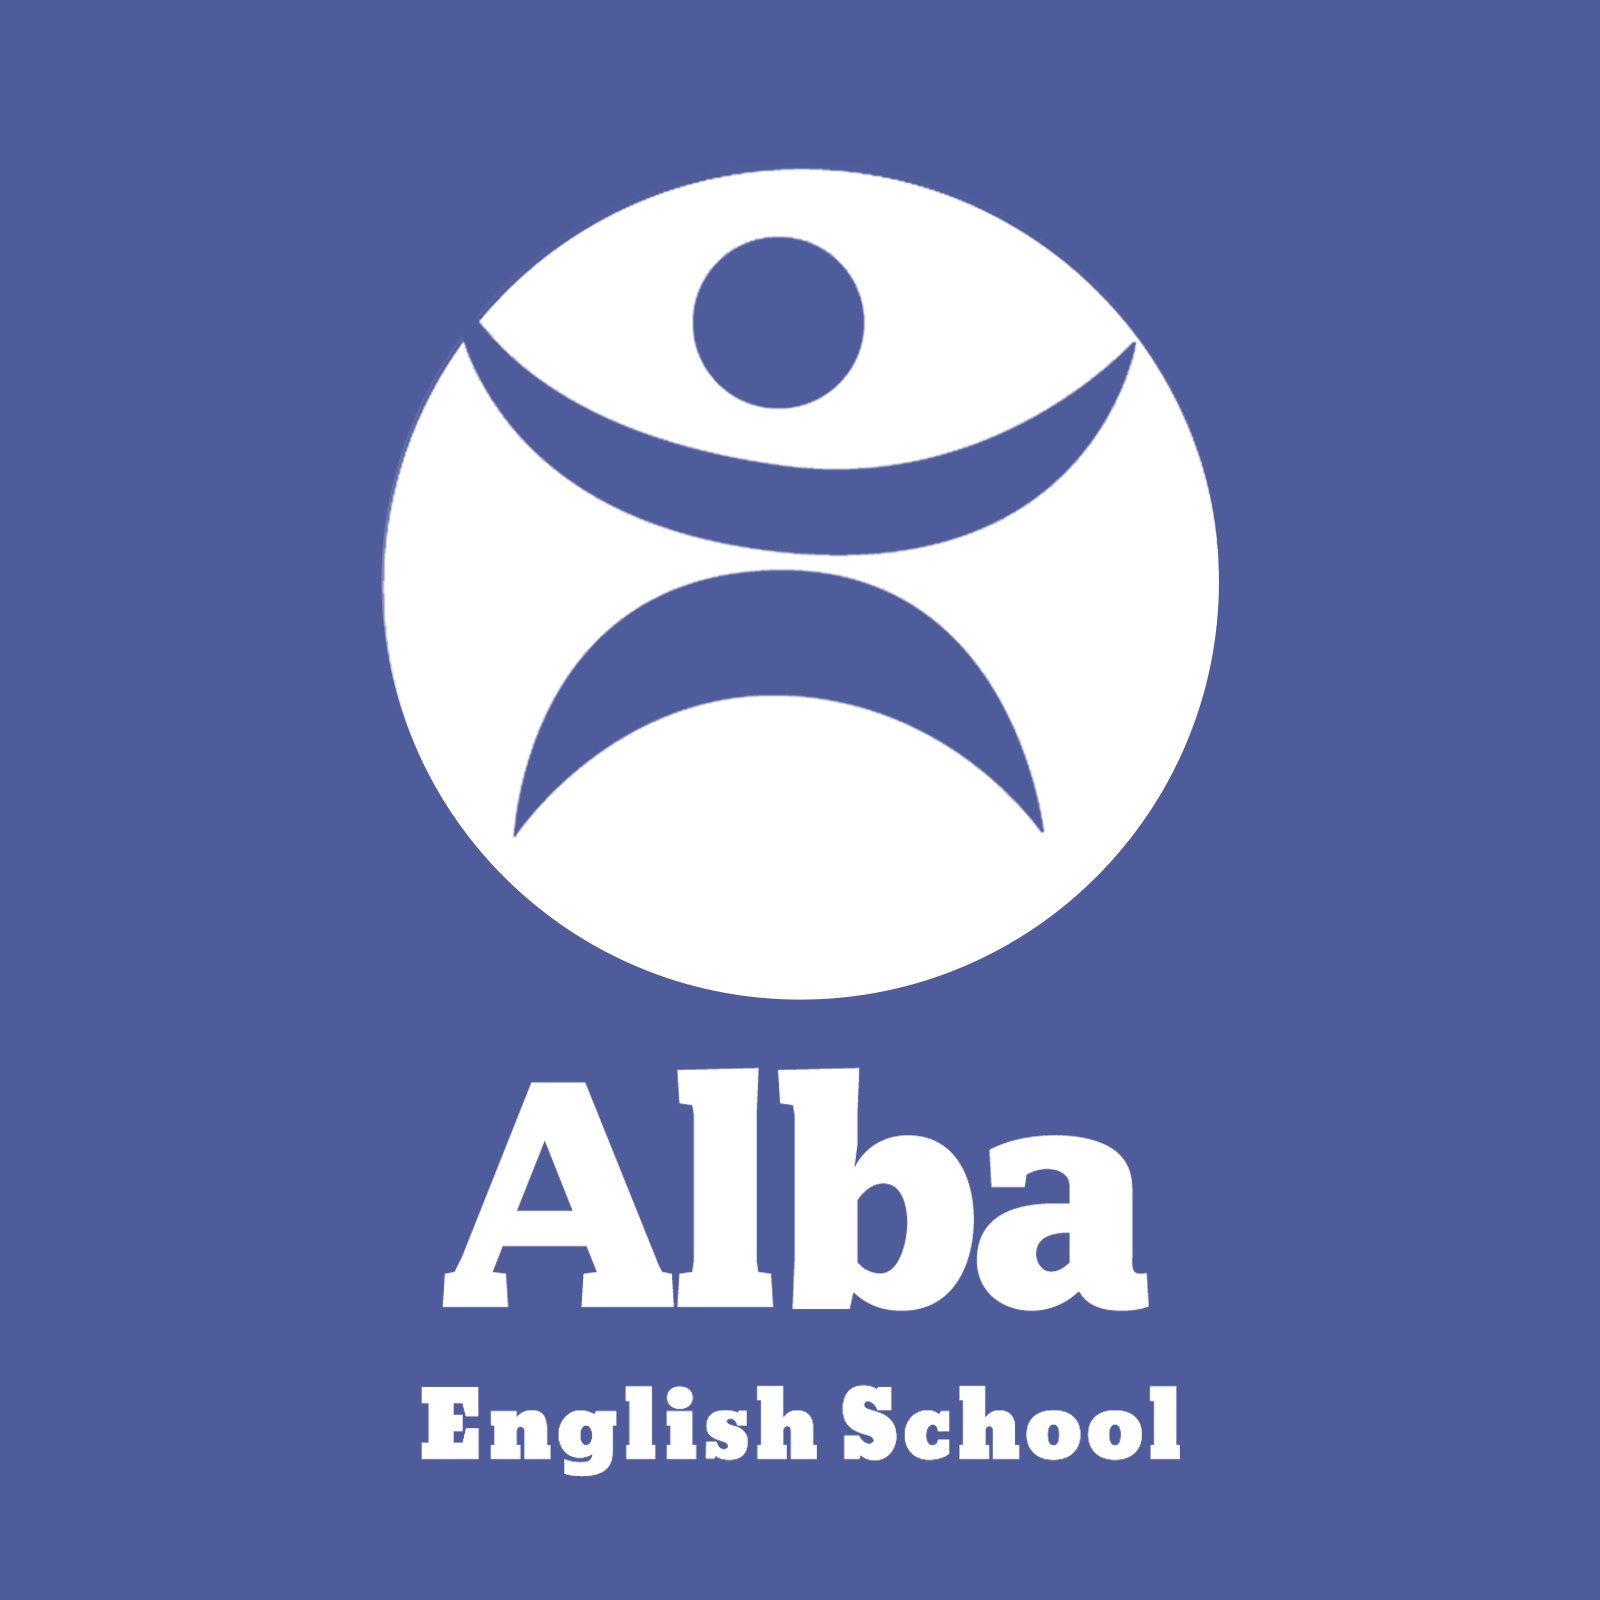 Alba English School logo